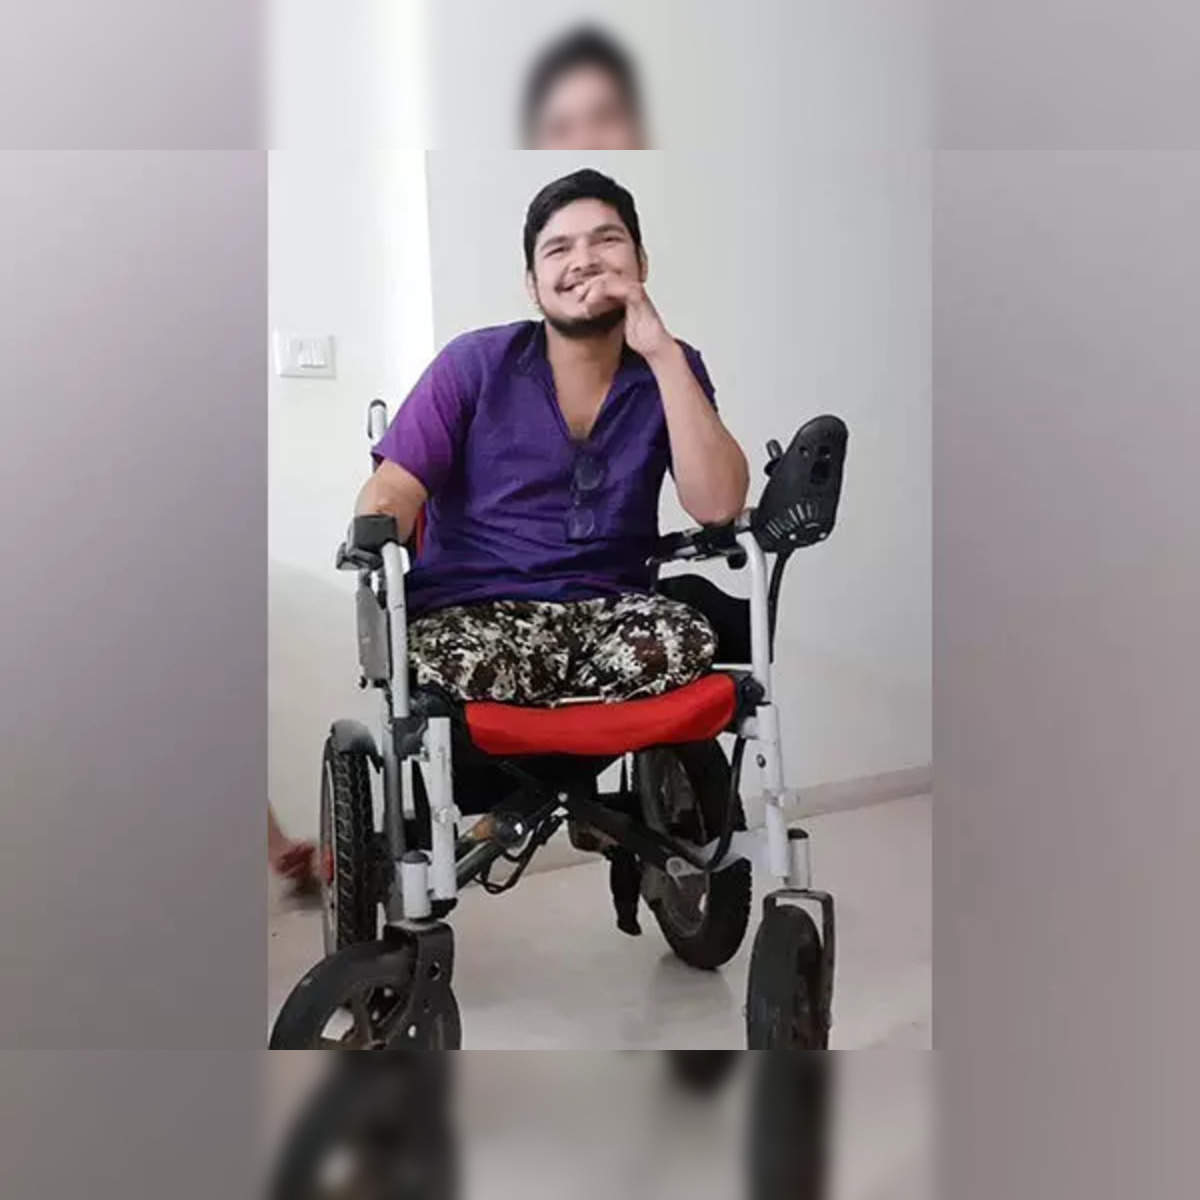 suraj: Suraj Tiwari who lost his legs, arm in train accident